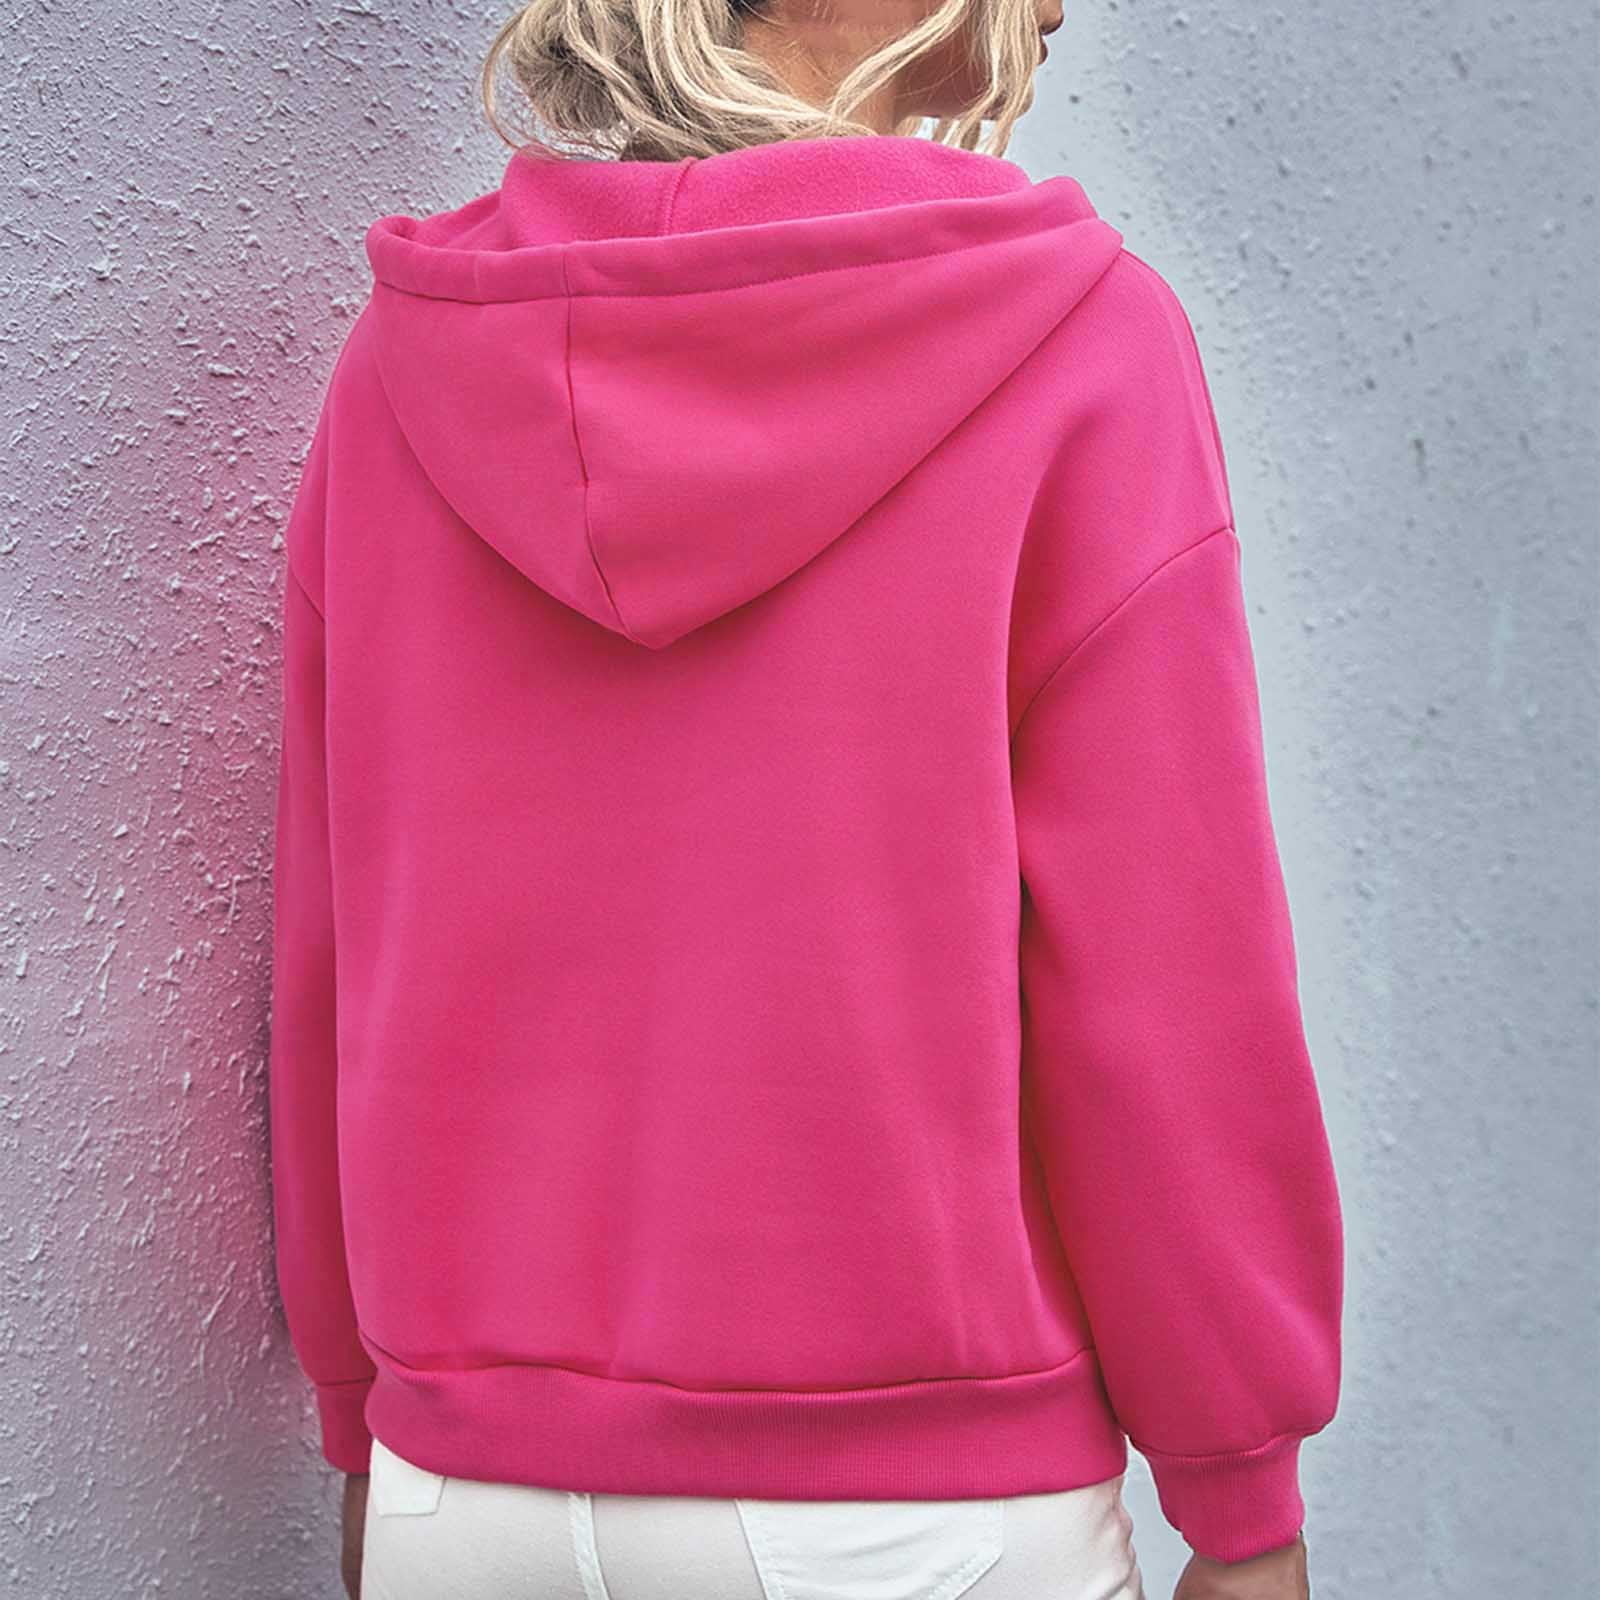 Styli Longline Oversized Hoodie with Kangaroo Pocket For Women (Pink, XL)